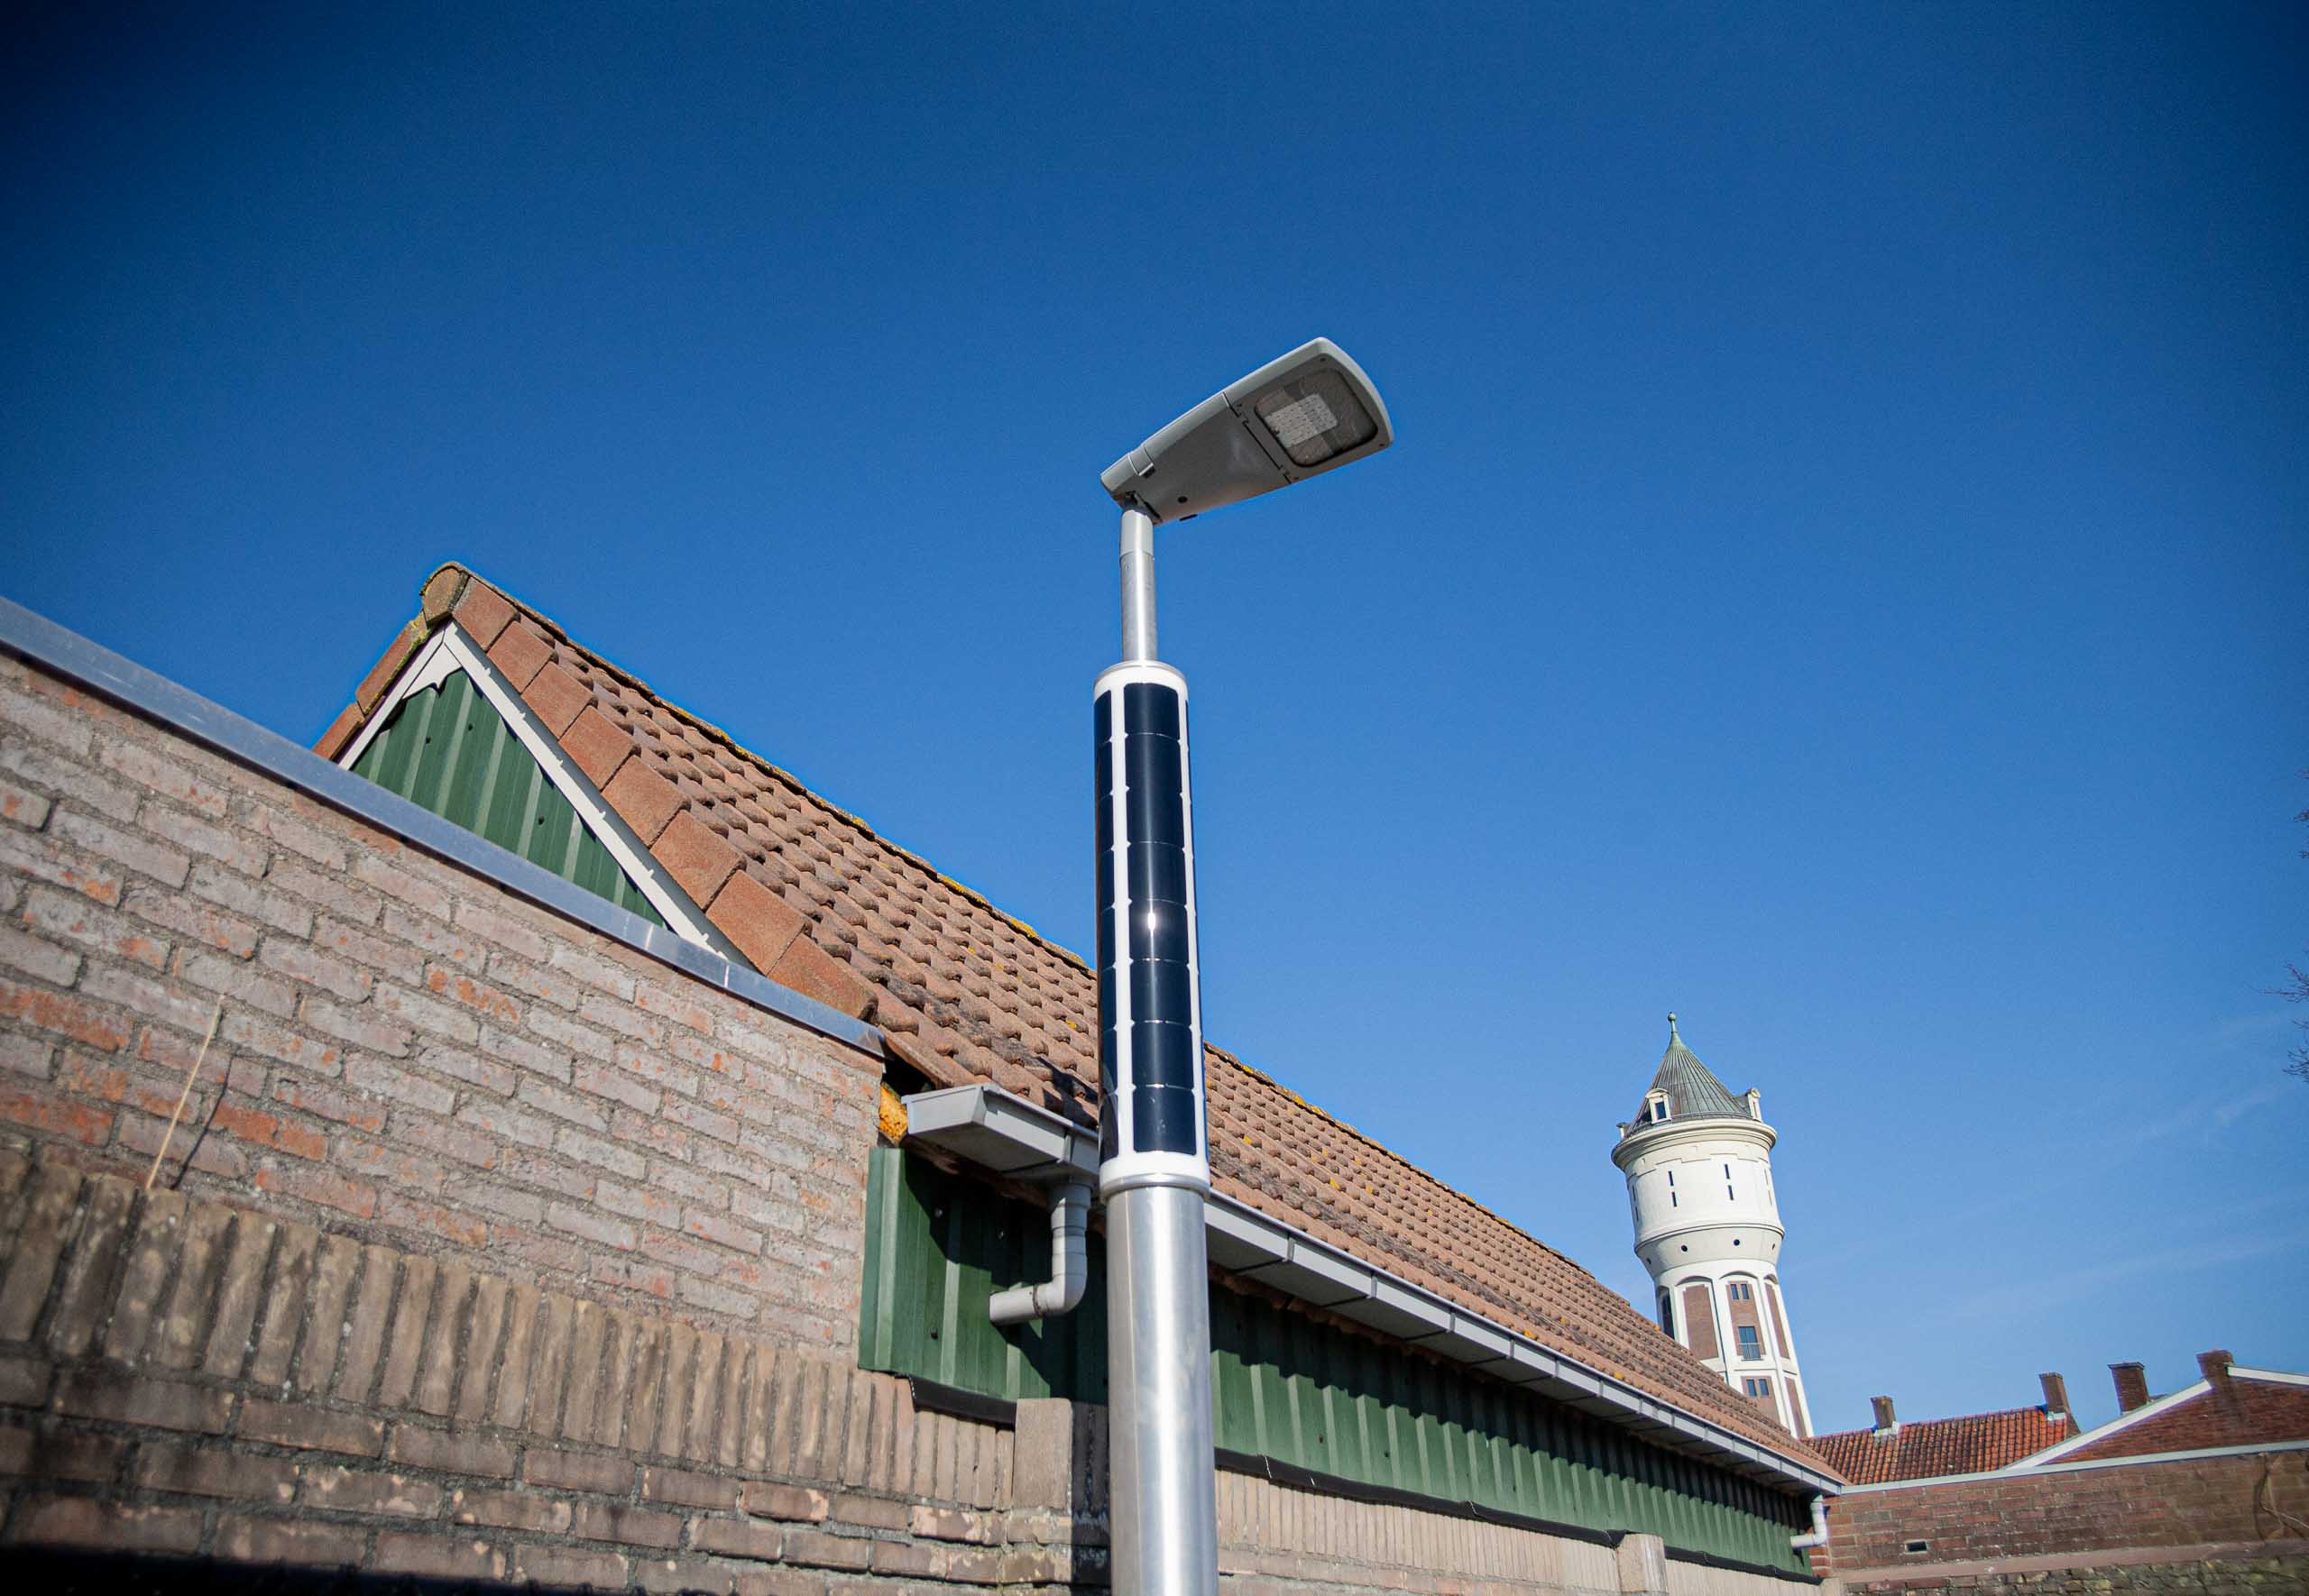 Solar powered parking lot light